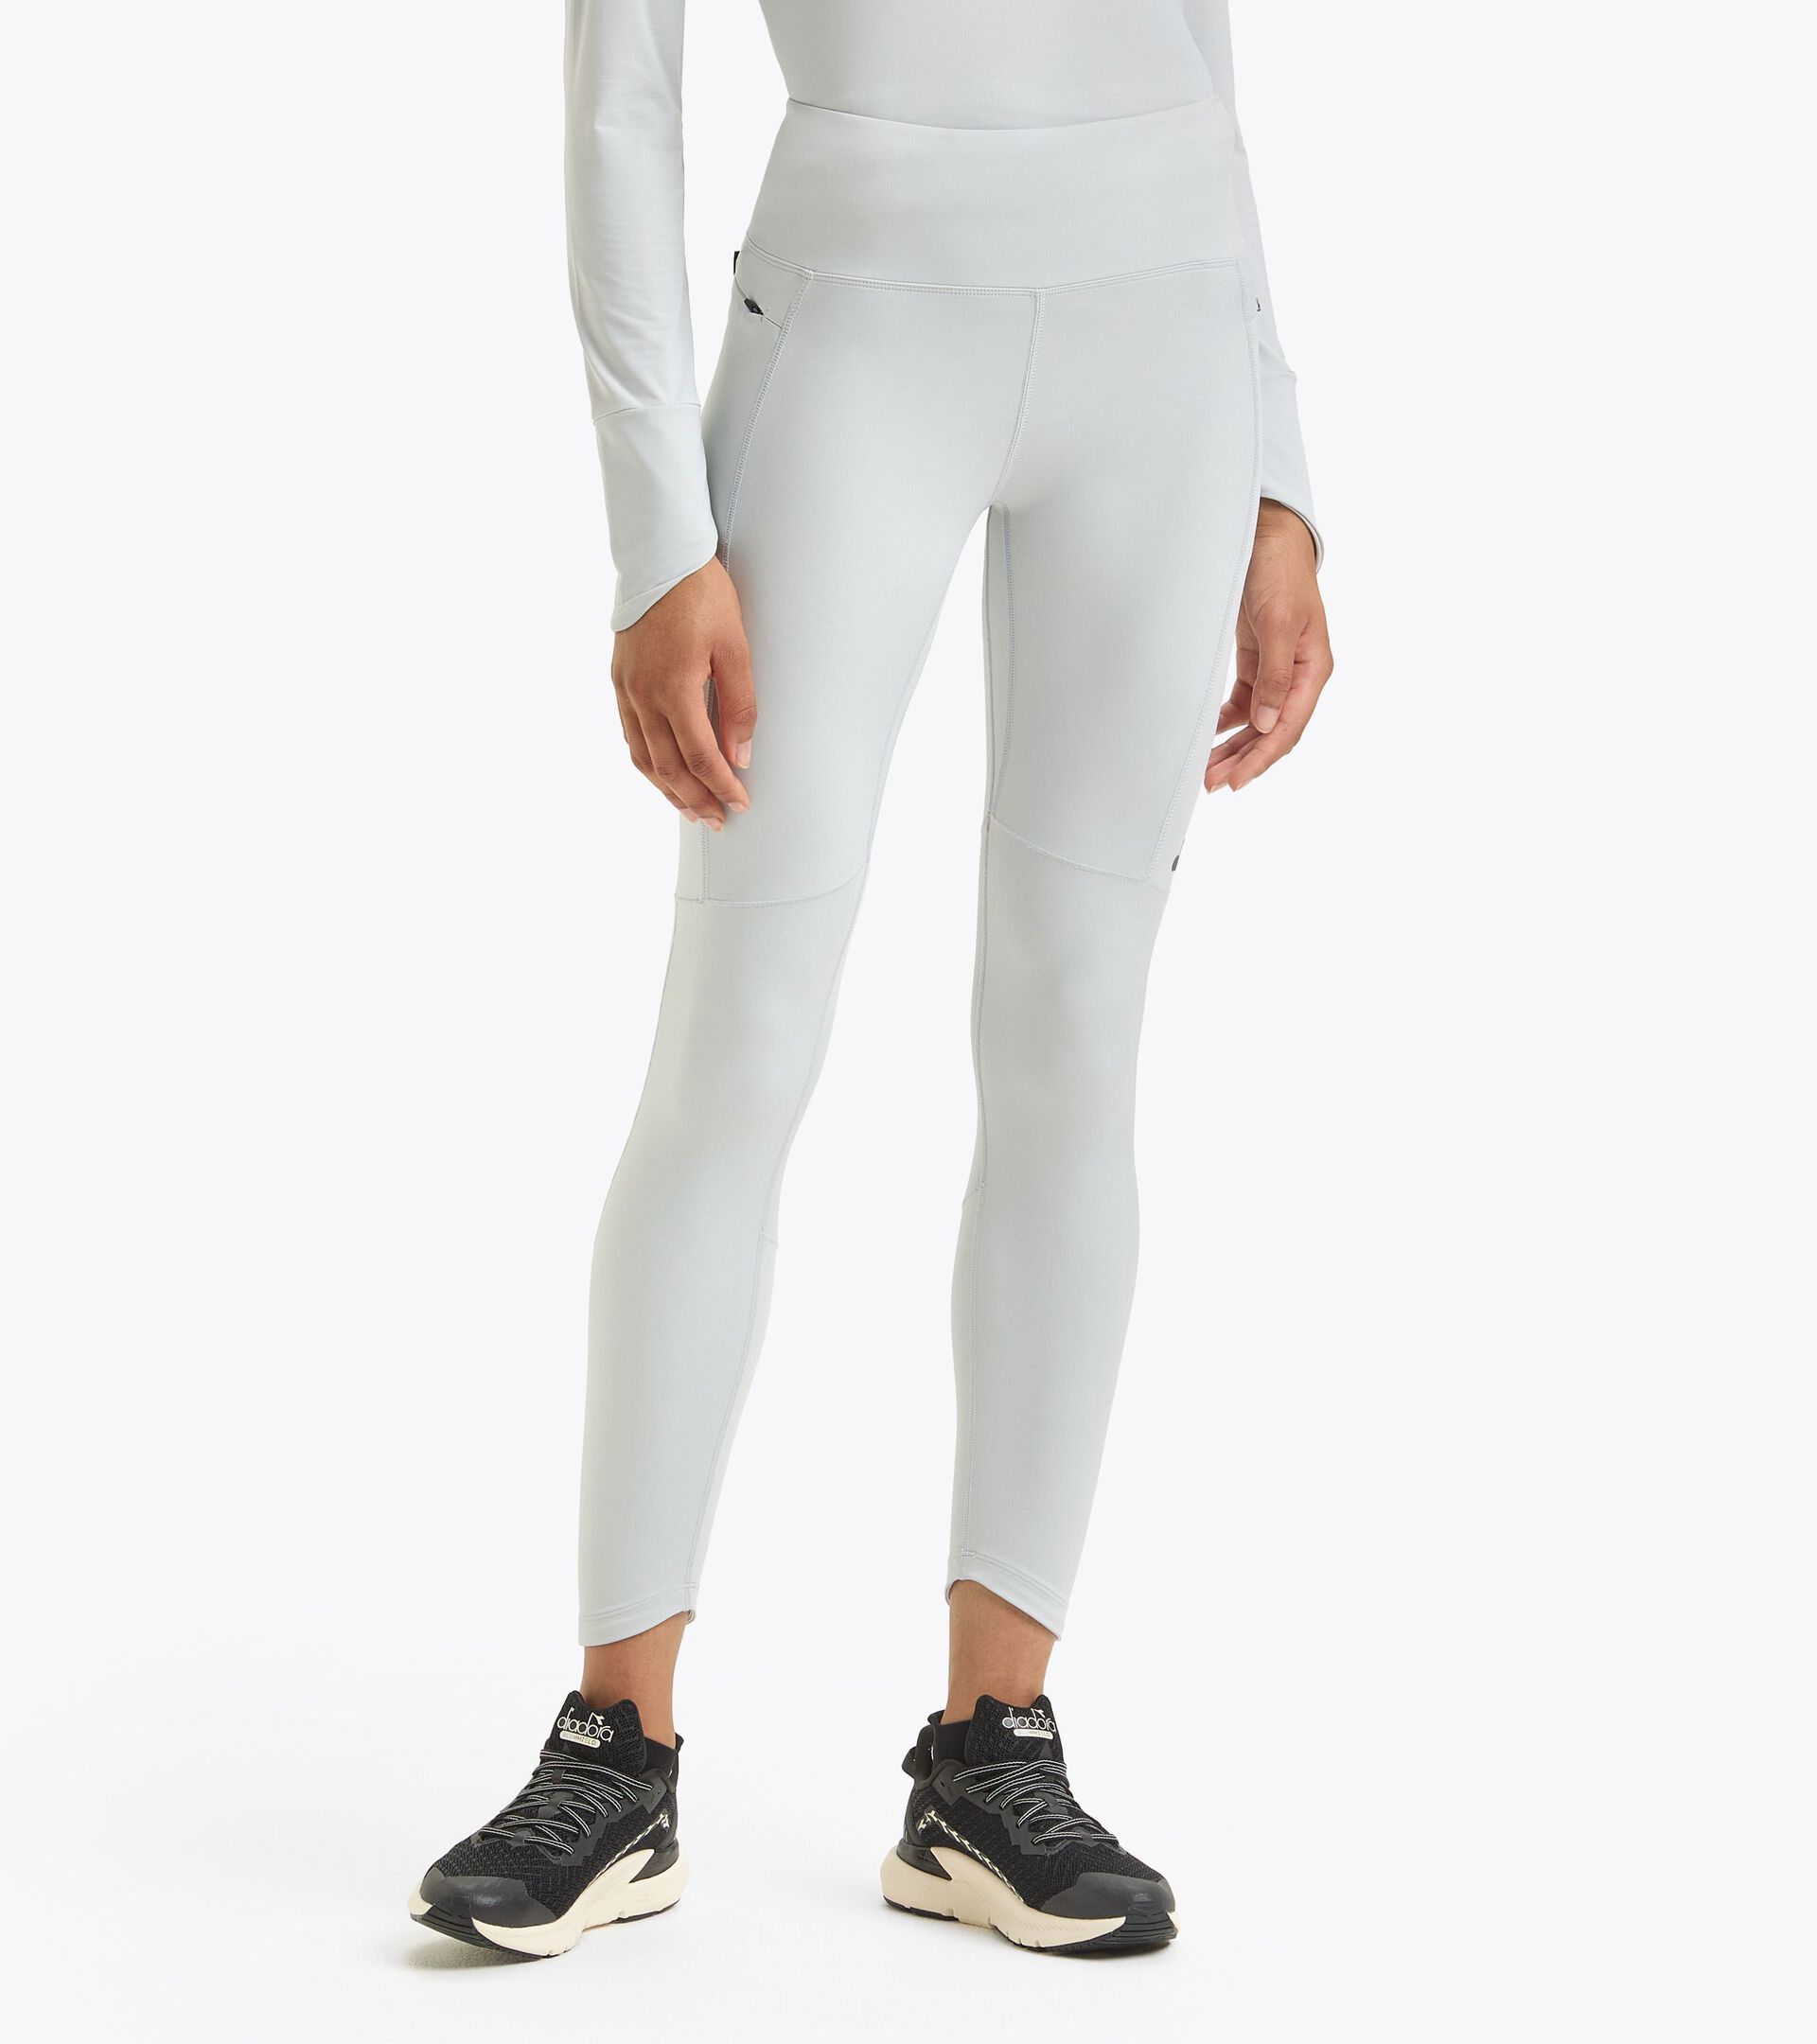 L. TIGHTS RUN CREW Running leggings - Women - Diadora Online Store US